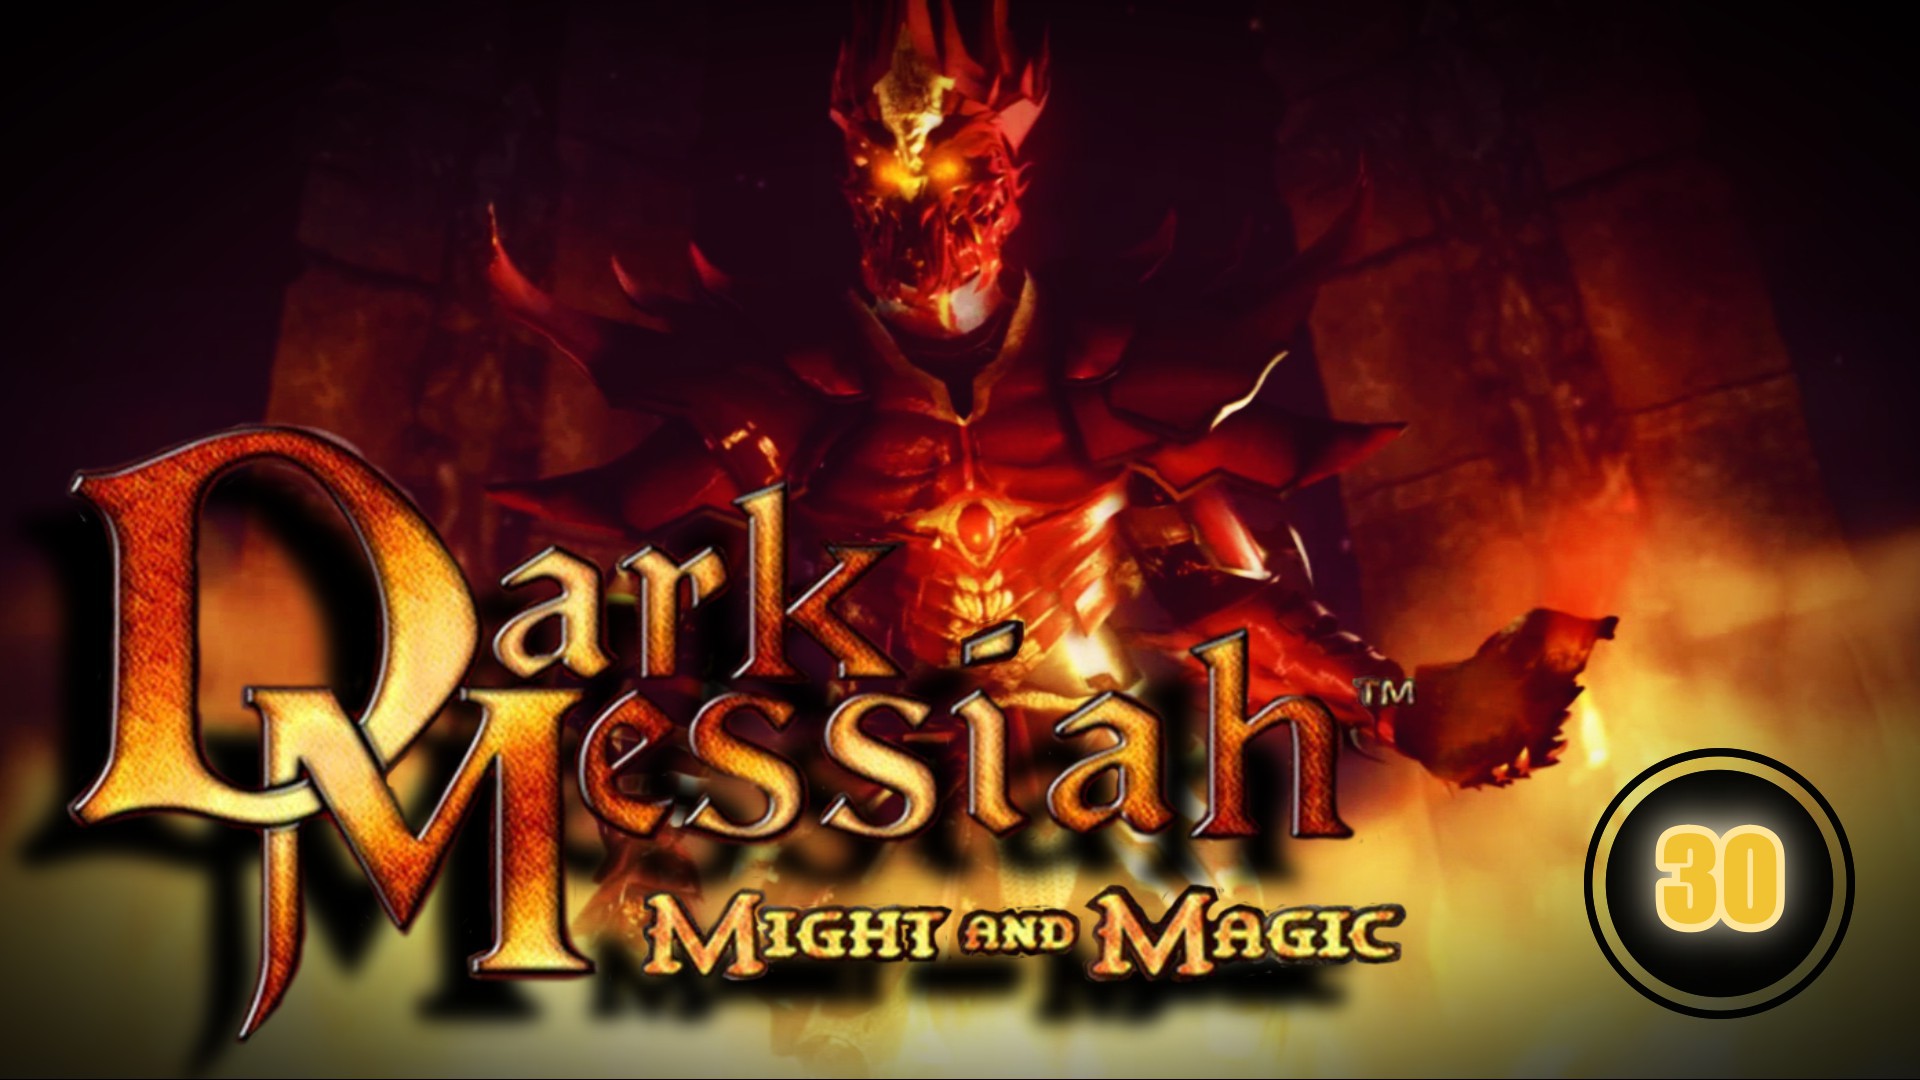 Dark Messiah of Might and Magic 30